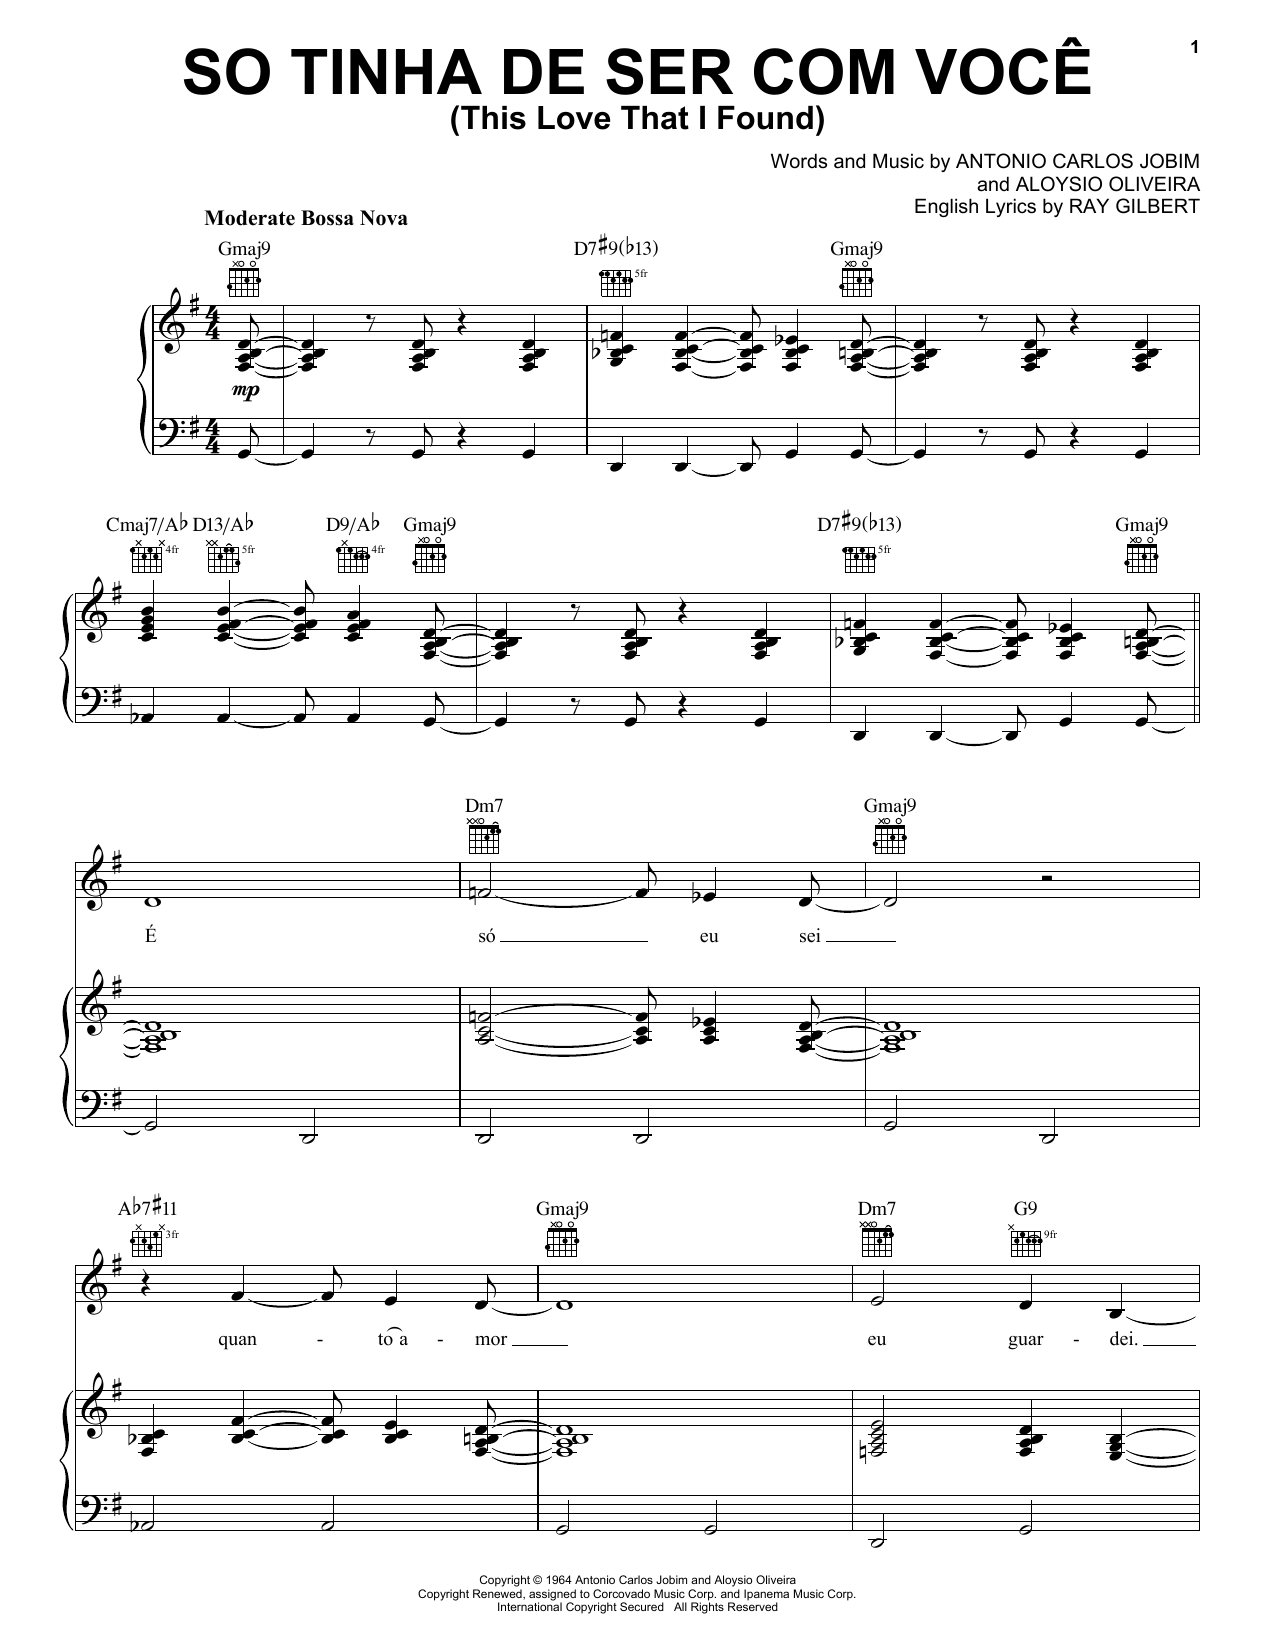 Antonio Carlos Jobim So Tinha De Ser Com Voce (This Love That I Found) Sheet Music Notes & Chords for Piano, Vocal & Guitar (Right-Hand Melody) - Download or Print PDF